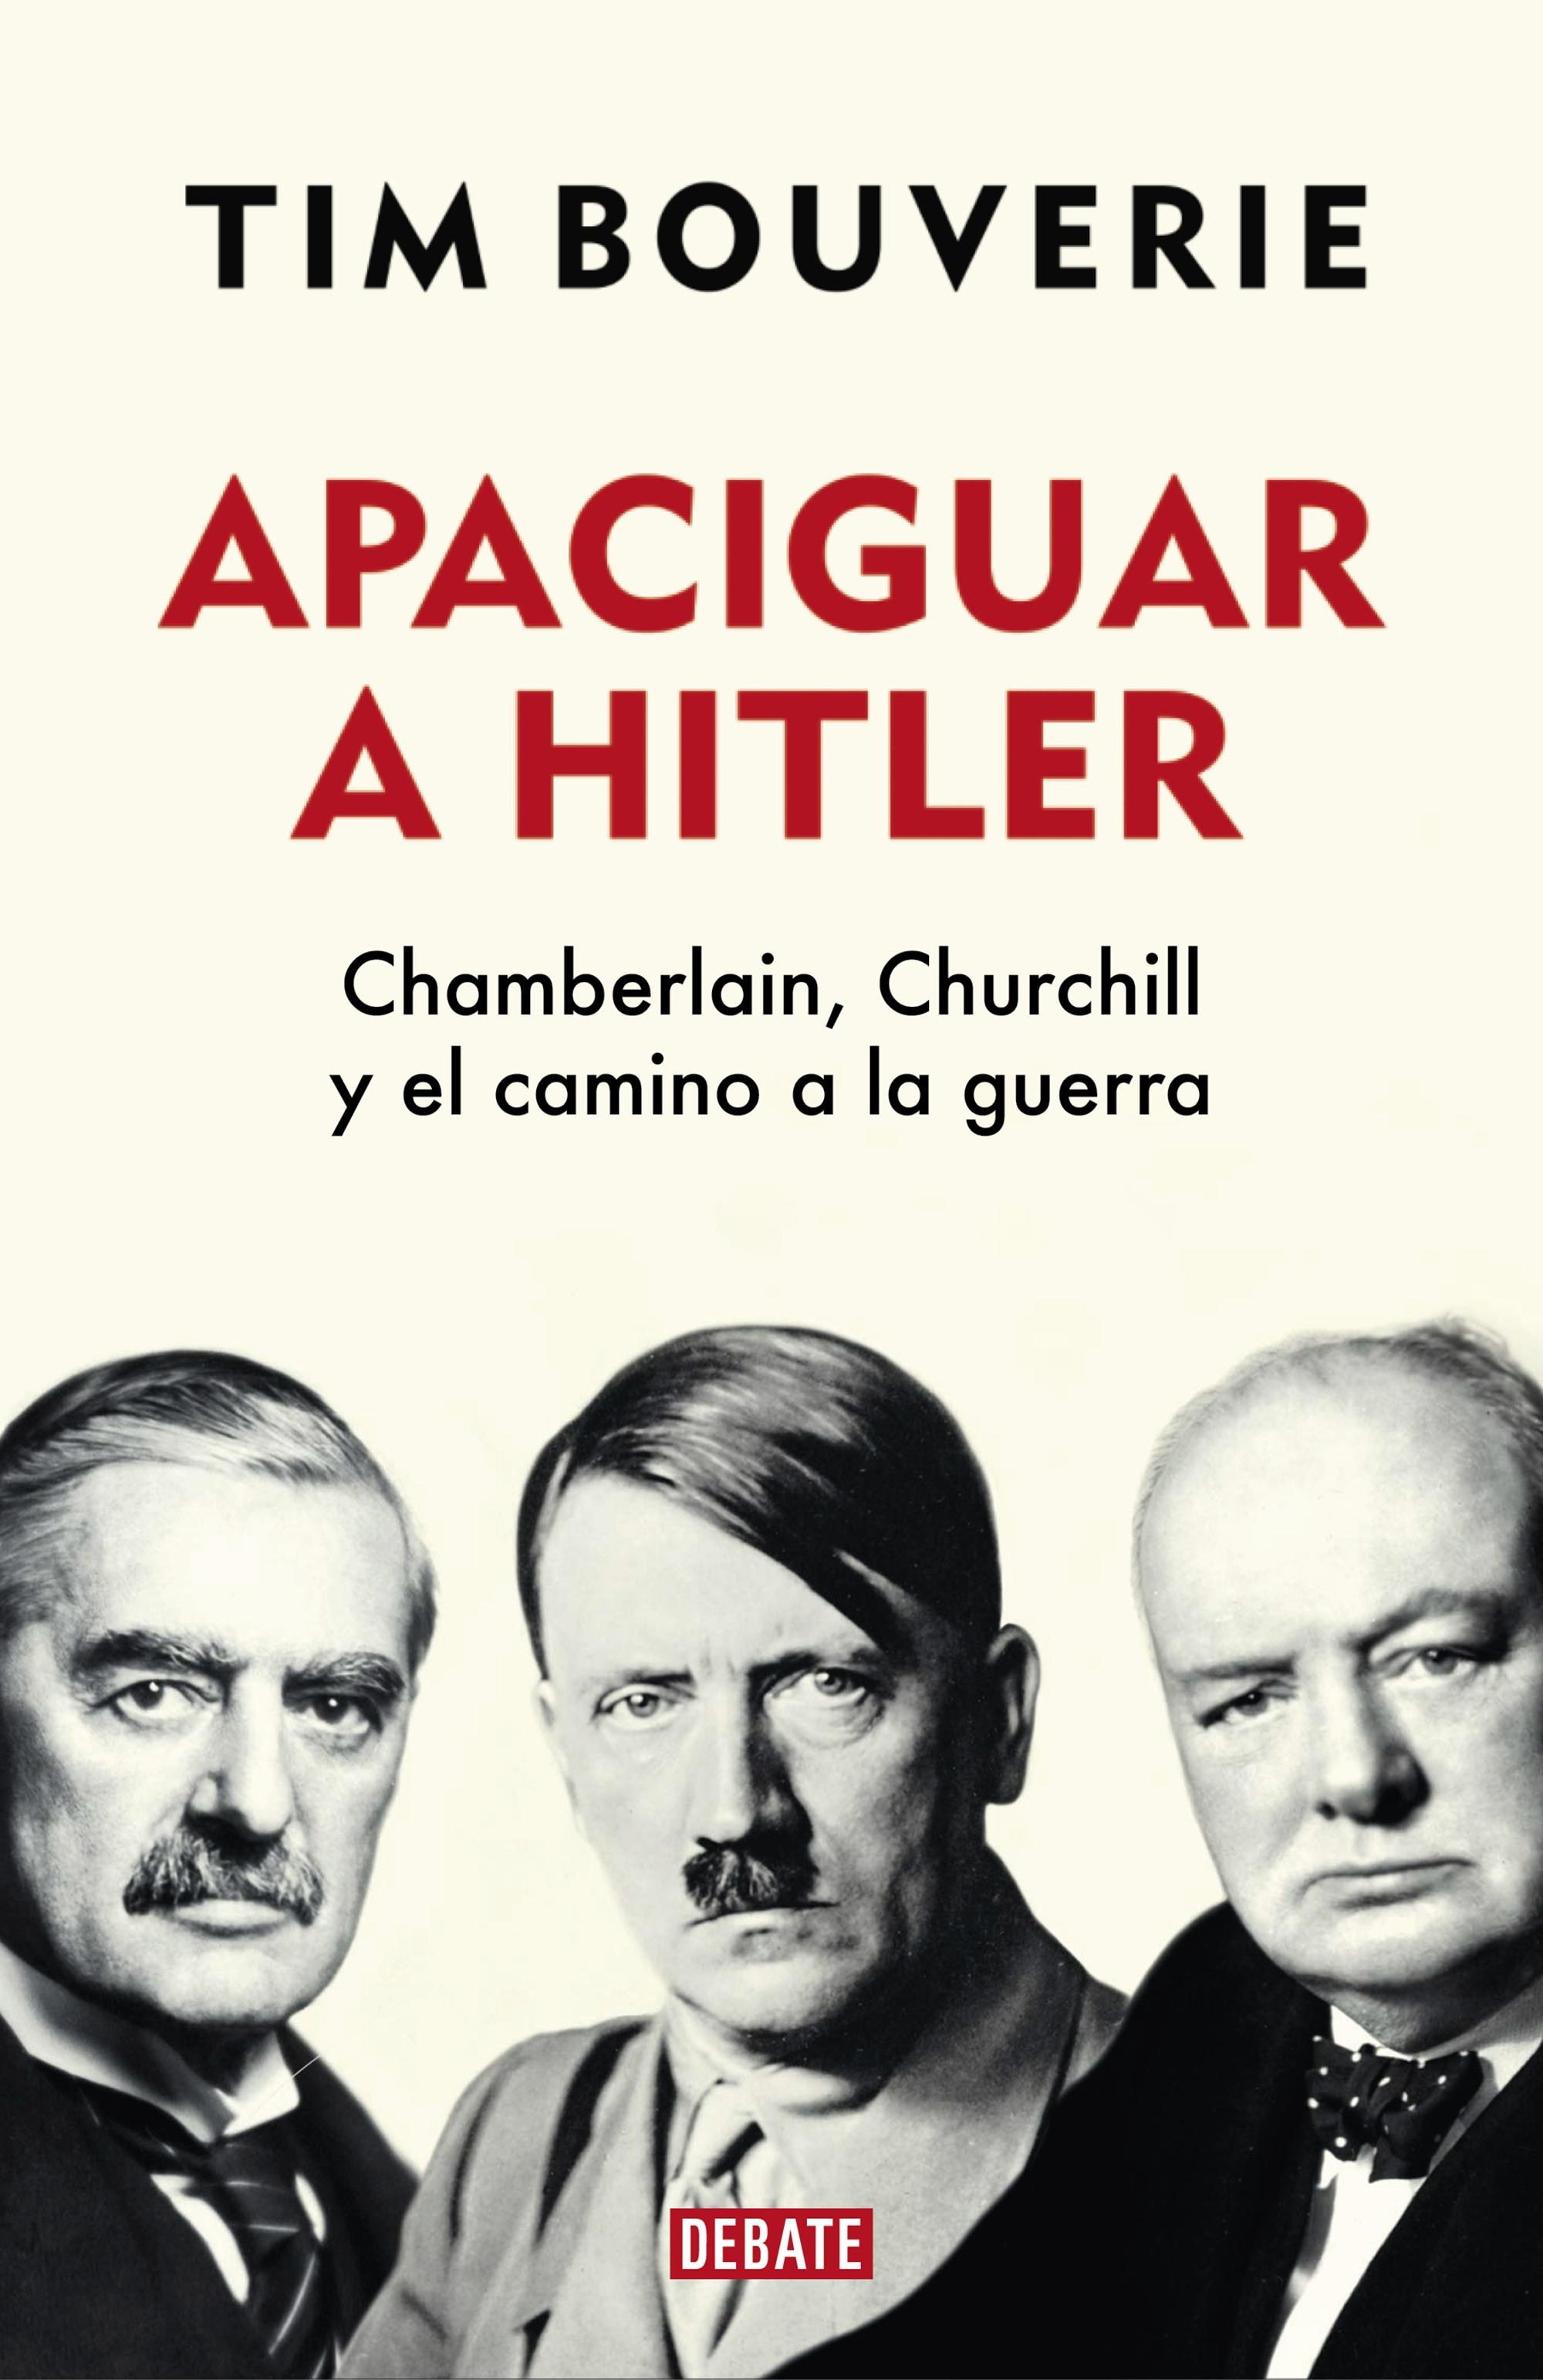 Apaciguar a Hitler "Chamberlain, Churchill y el camino de la guerra". 